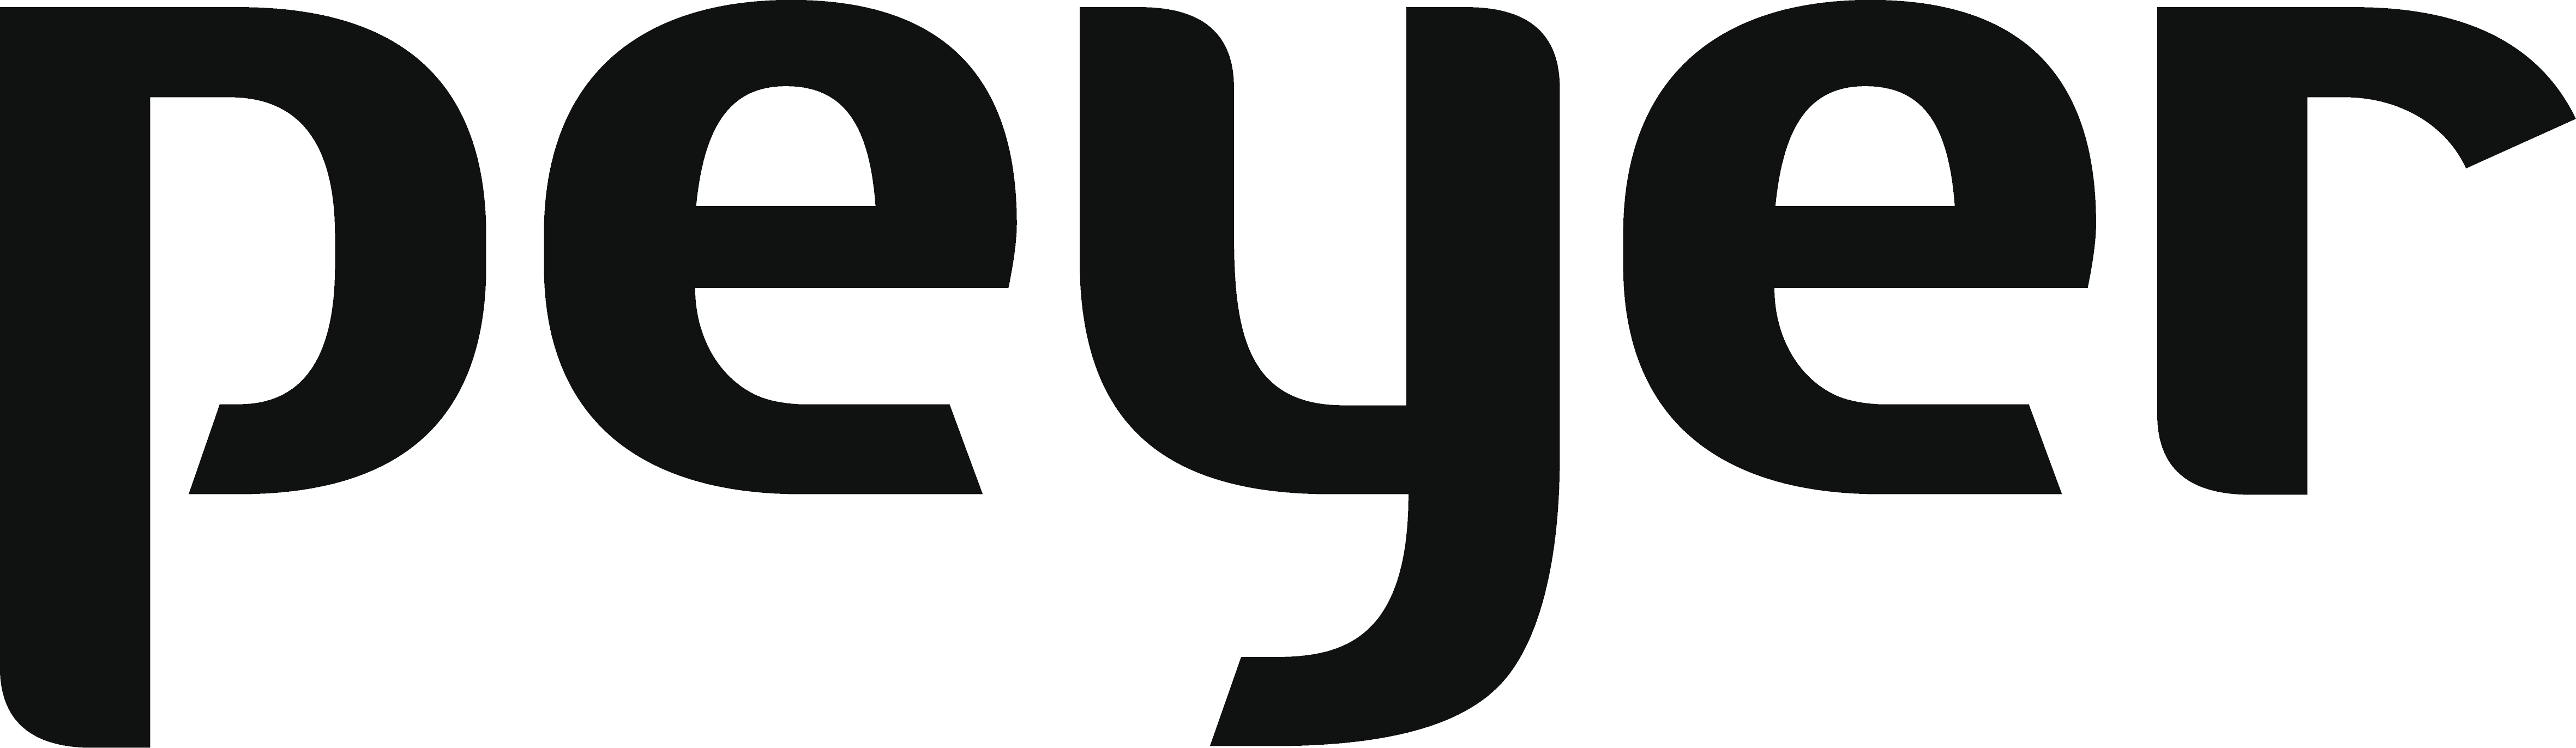 Peyer Gruppe logo